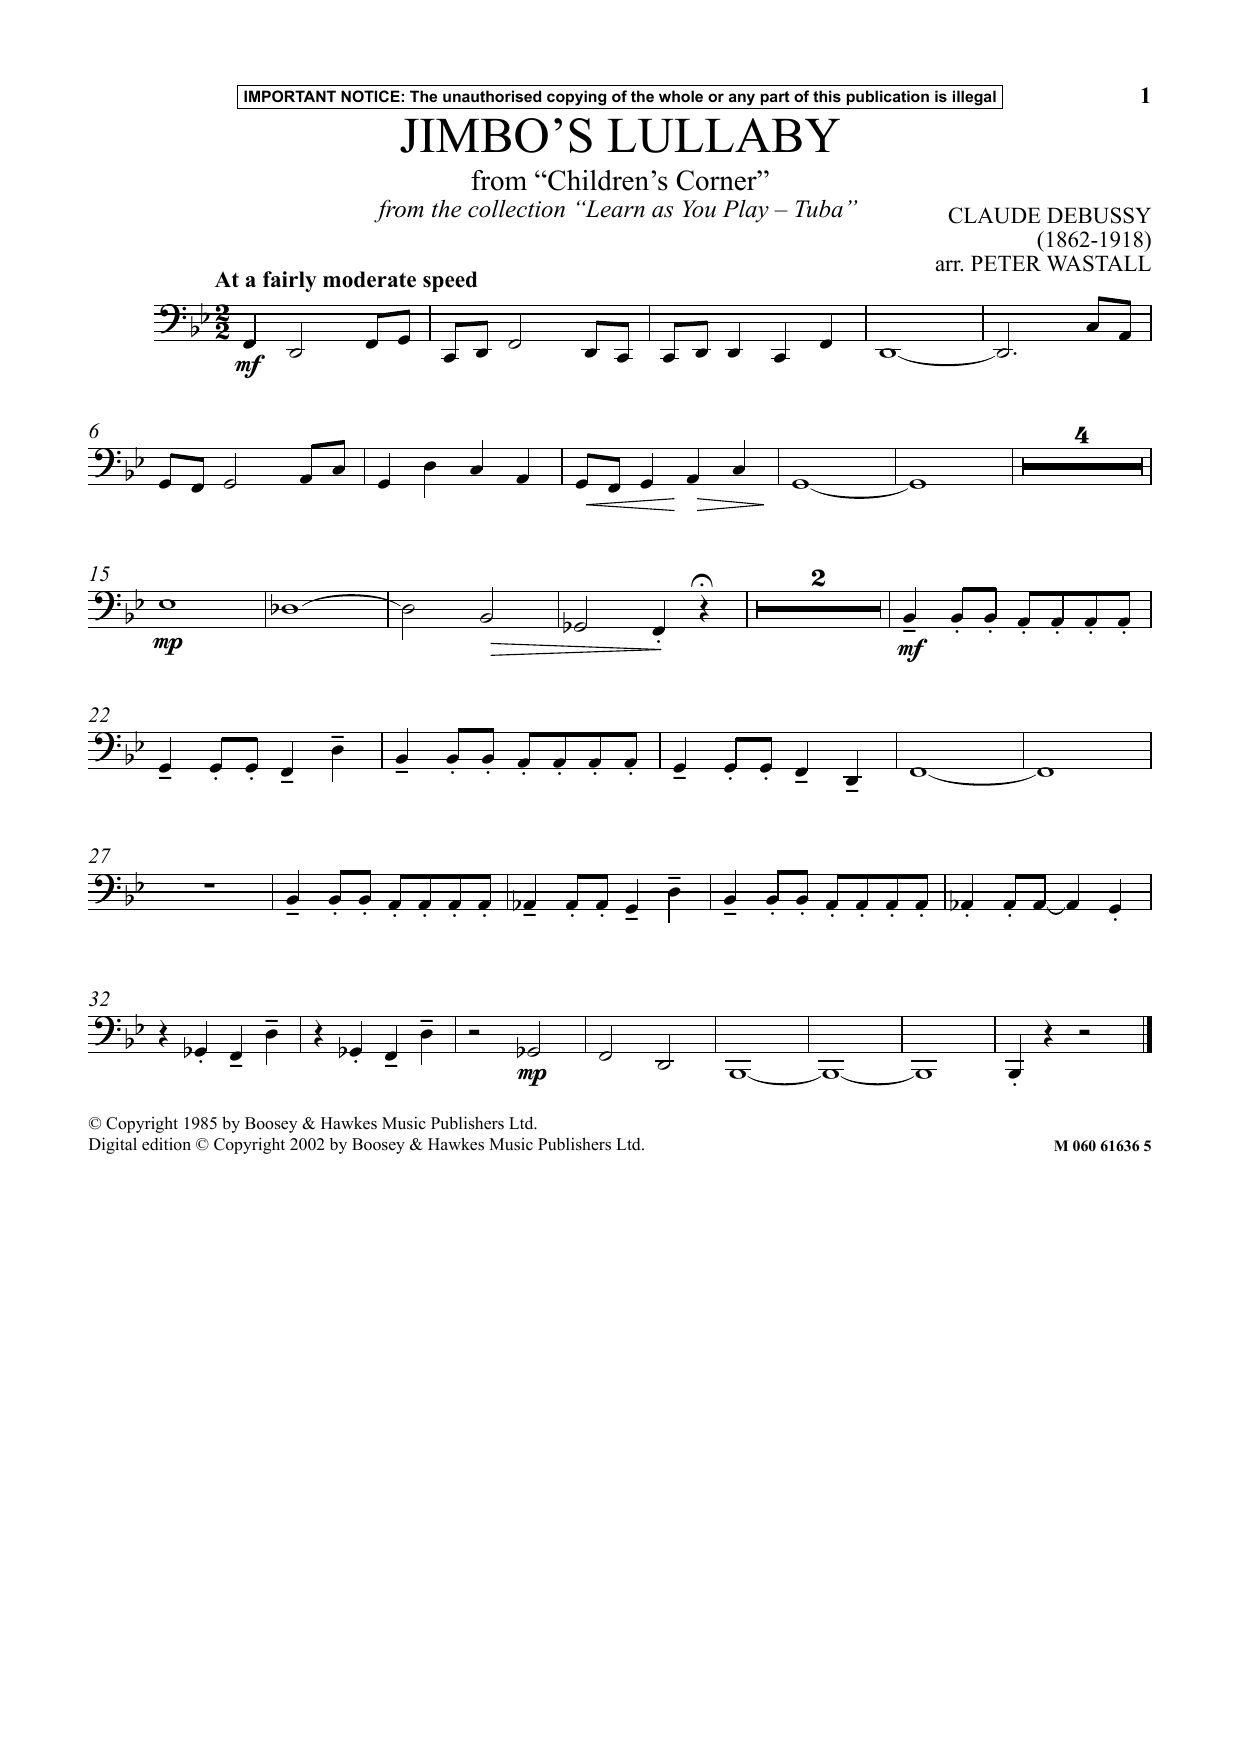 Download Peter Wastall Jimbo's Lullaby From Children's Corner Sheet Music